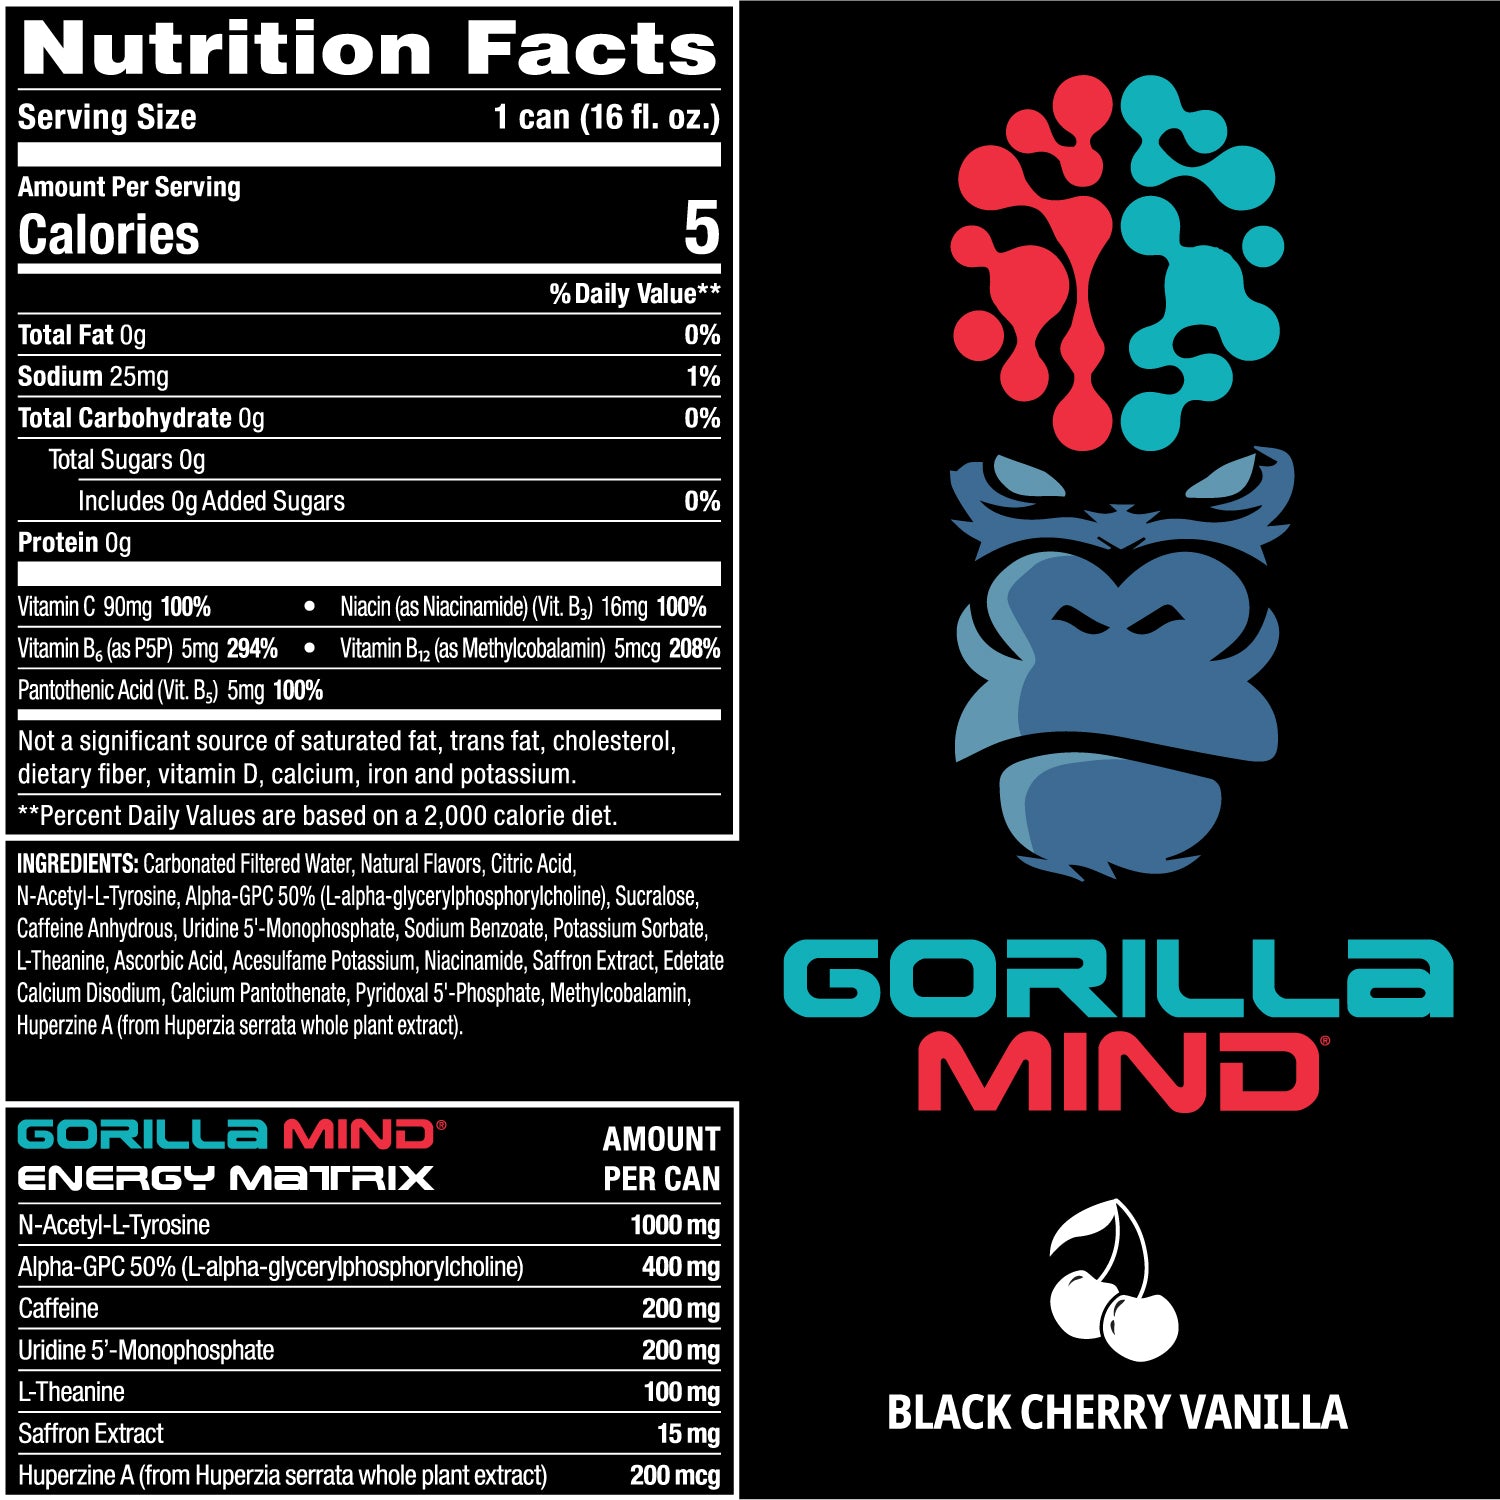 Black Cherry Vanilla Nutrition Facts